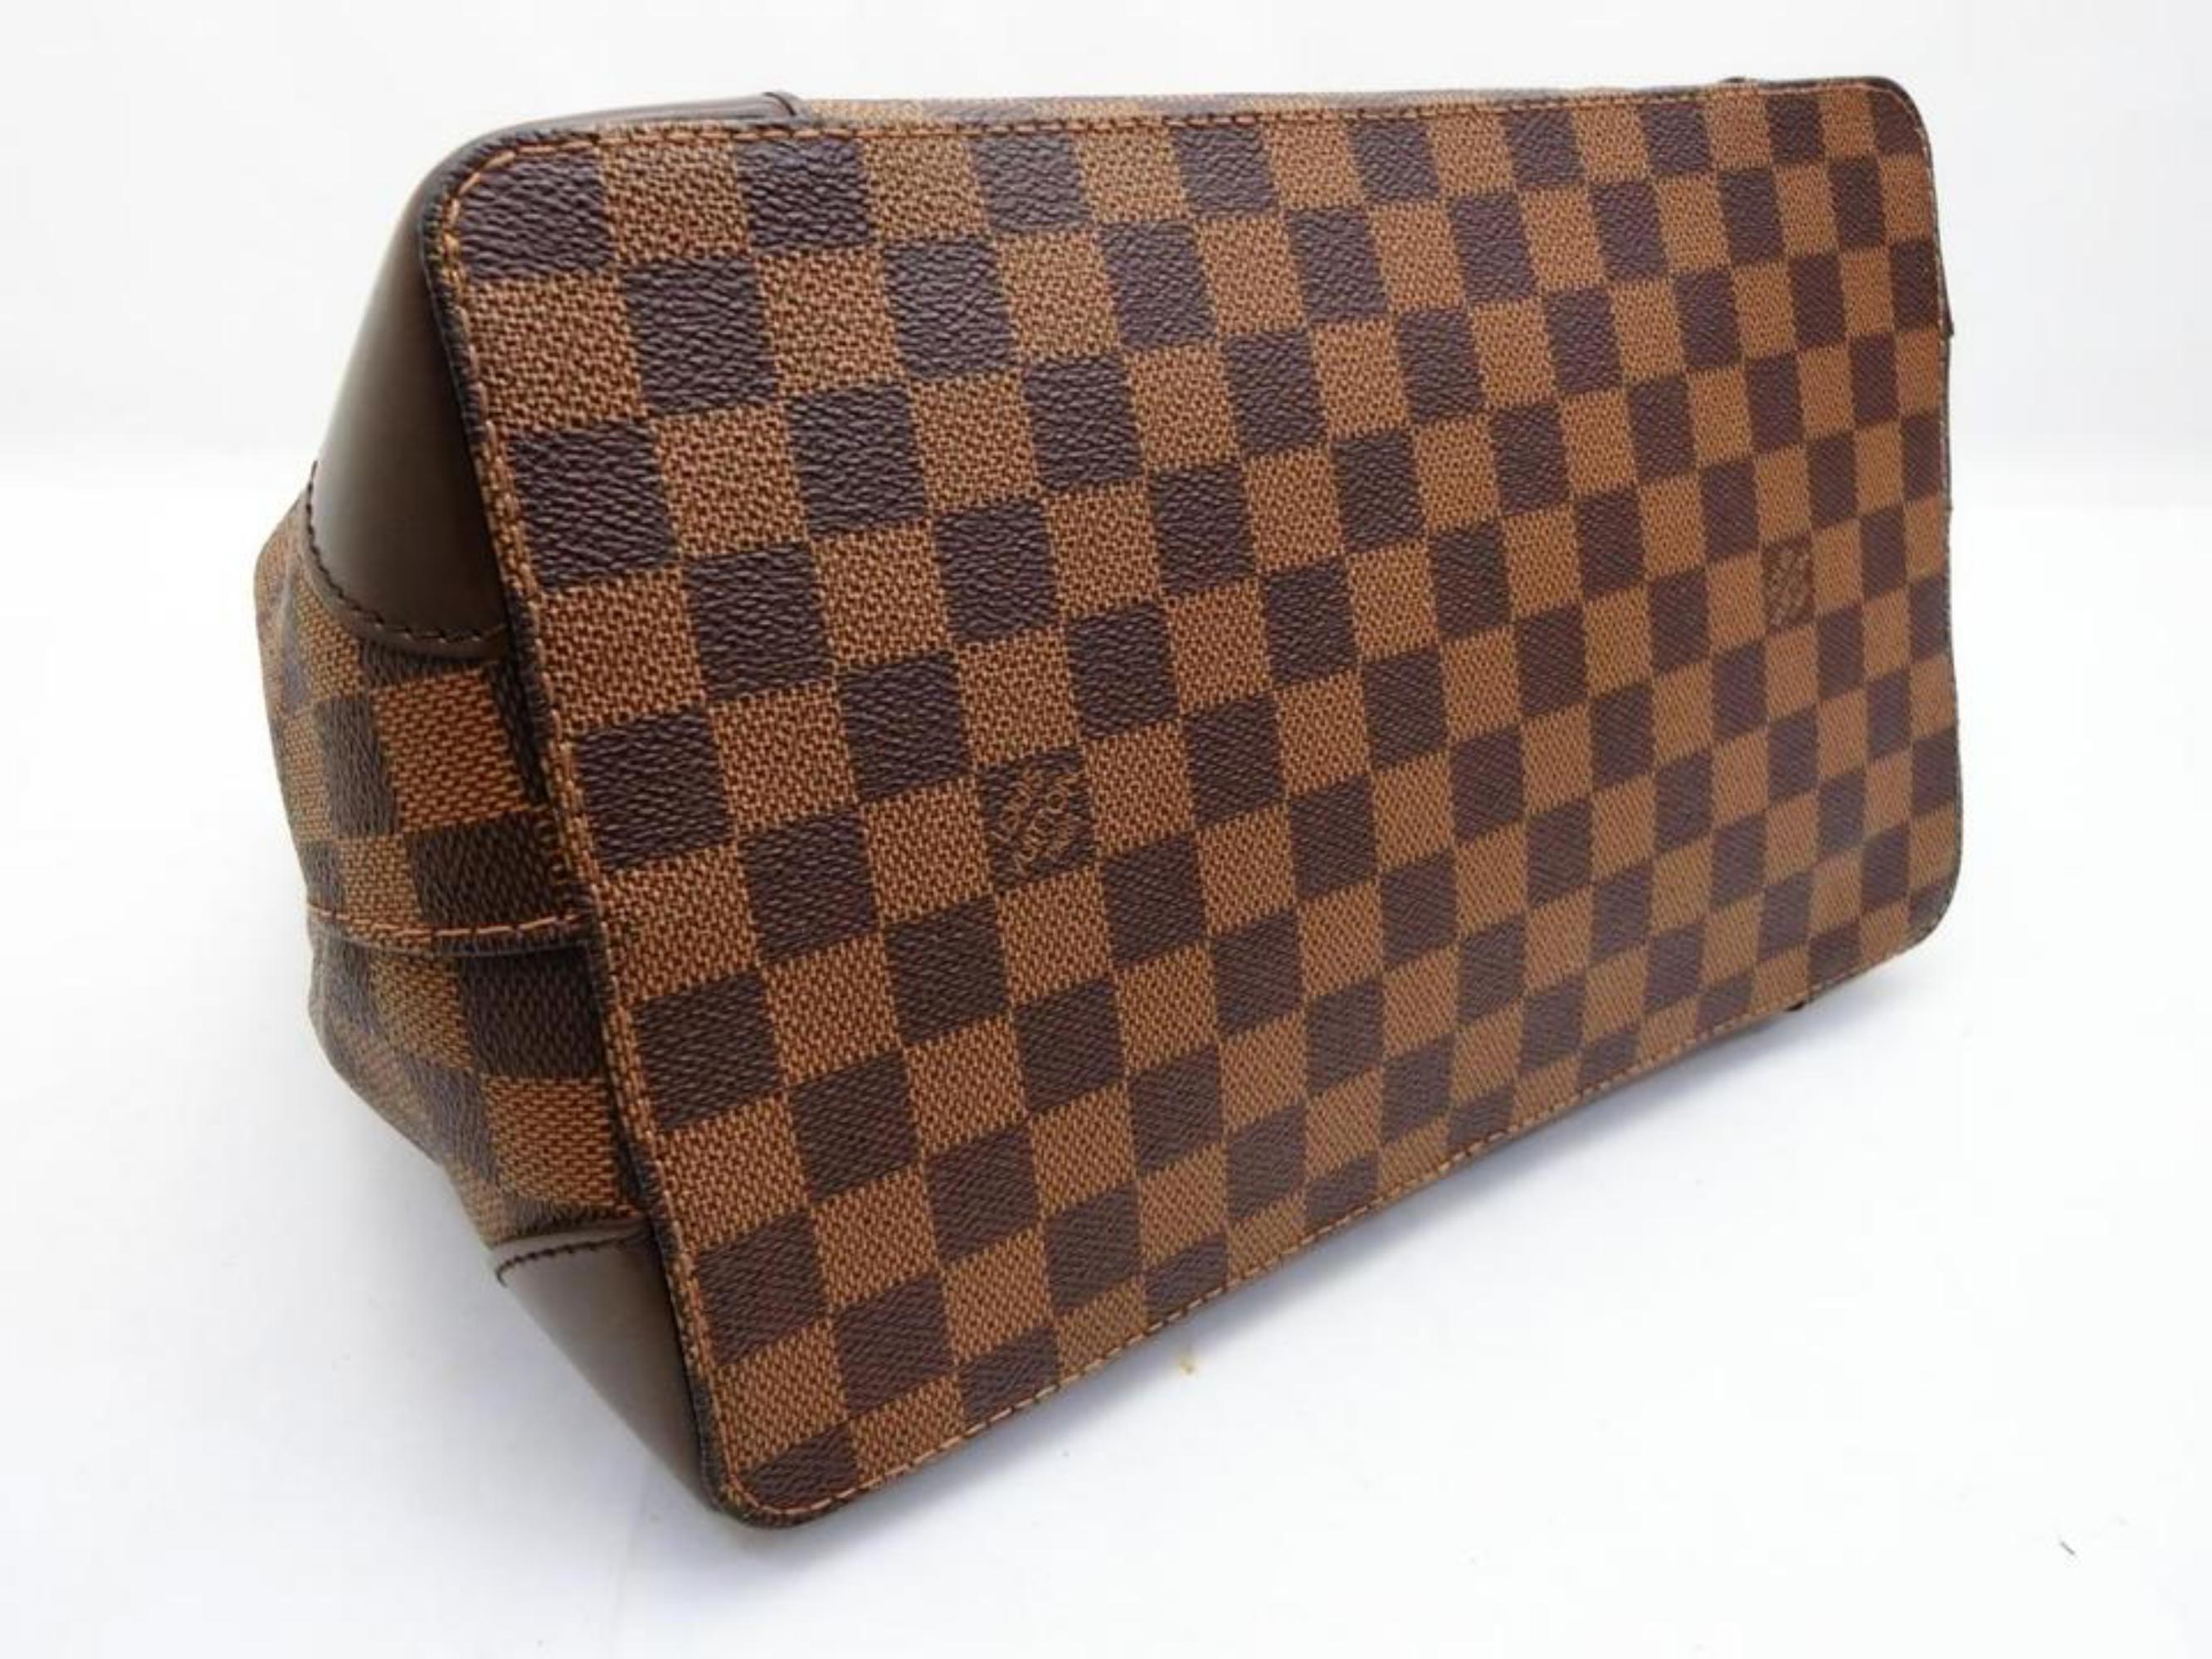 Louis Vuitton Hampstead Damier Ebene Pm 230090 Brown Coated Canvas Shoulder Bag For Sale 1